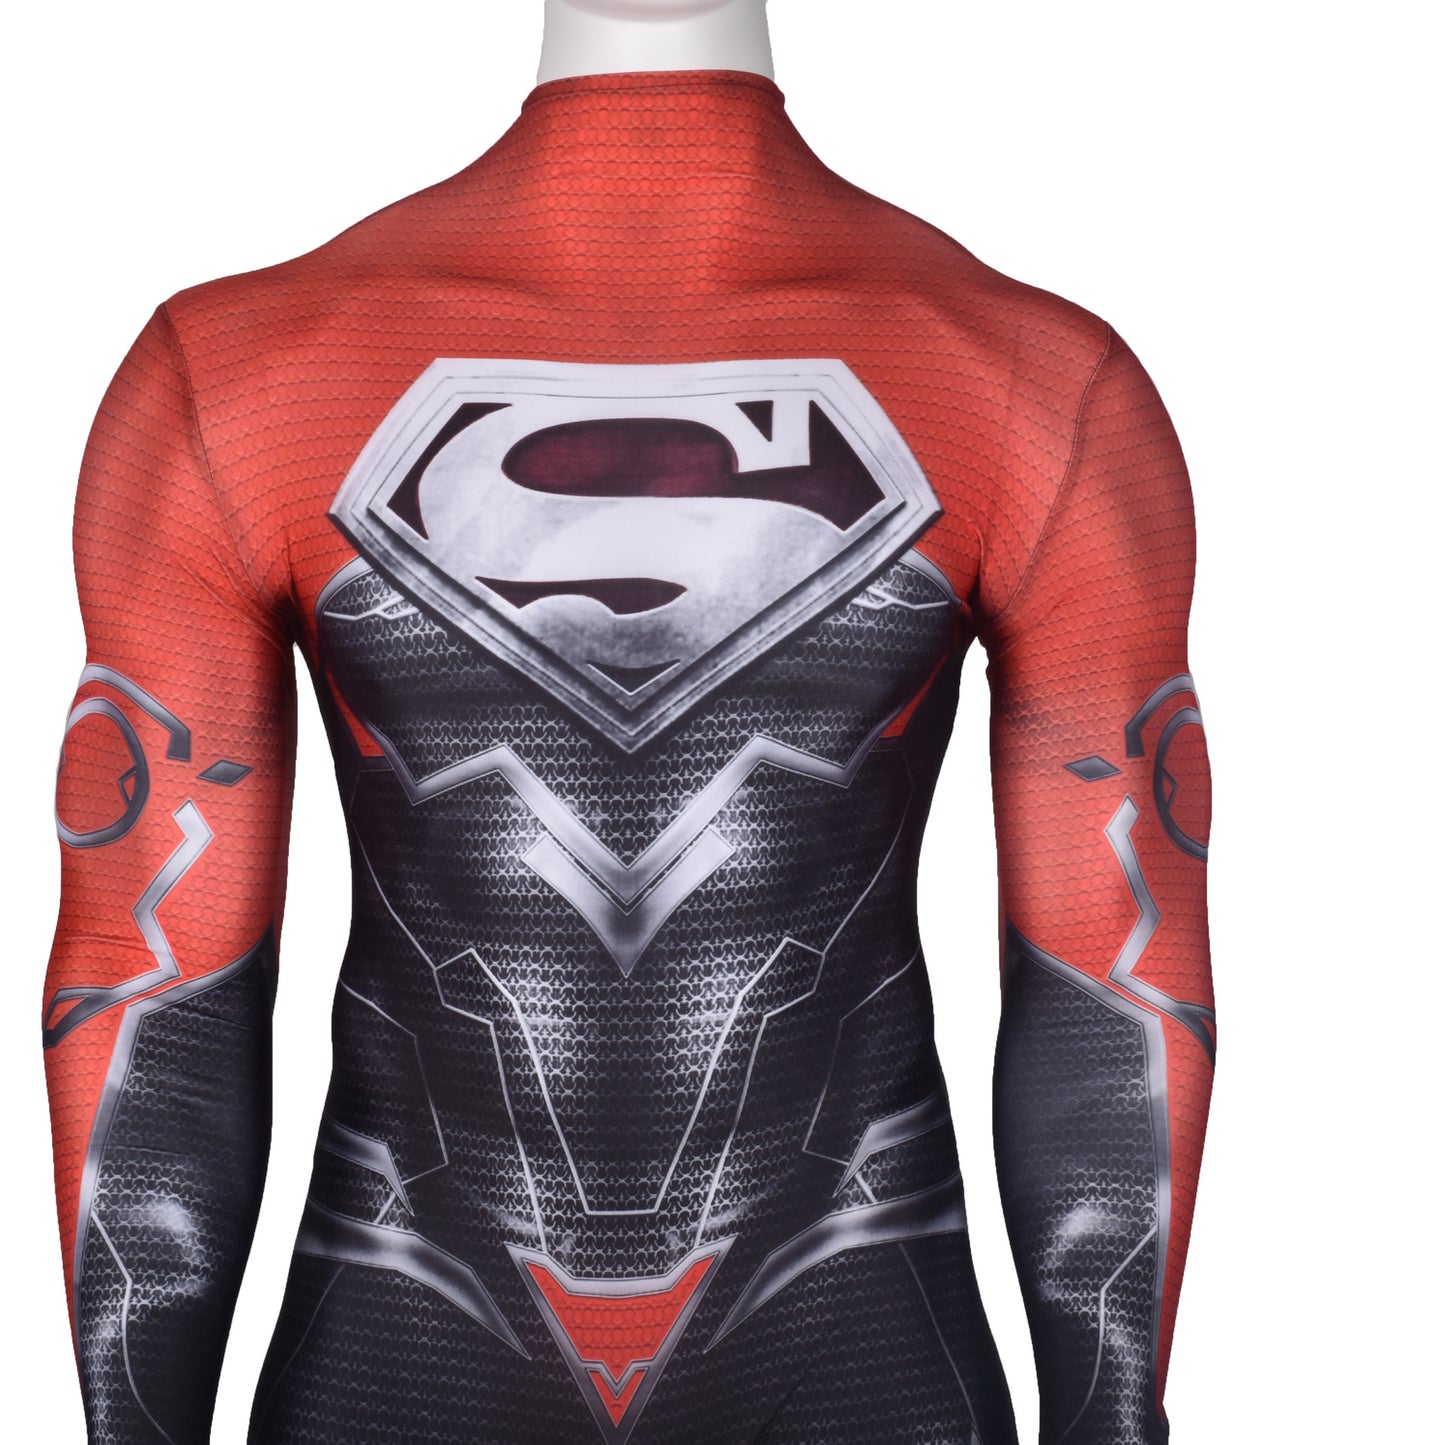 injustice godfall superman jumpsuits cosplay costume kids adult halloween bodysuit